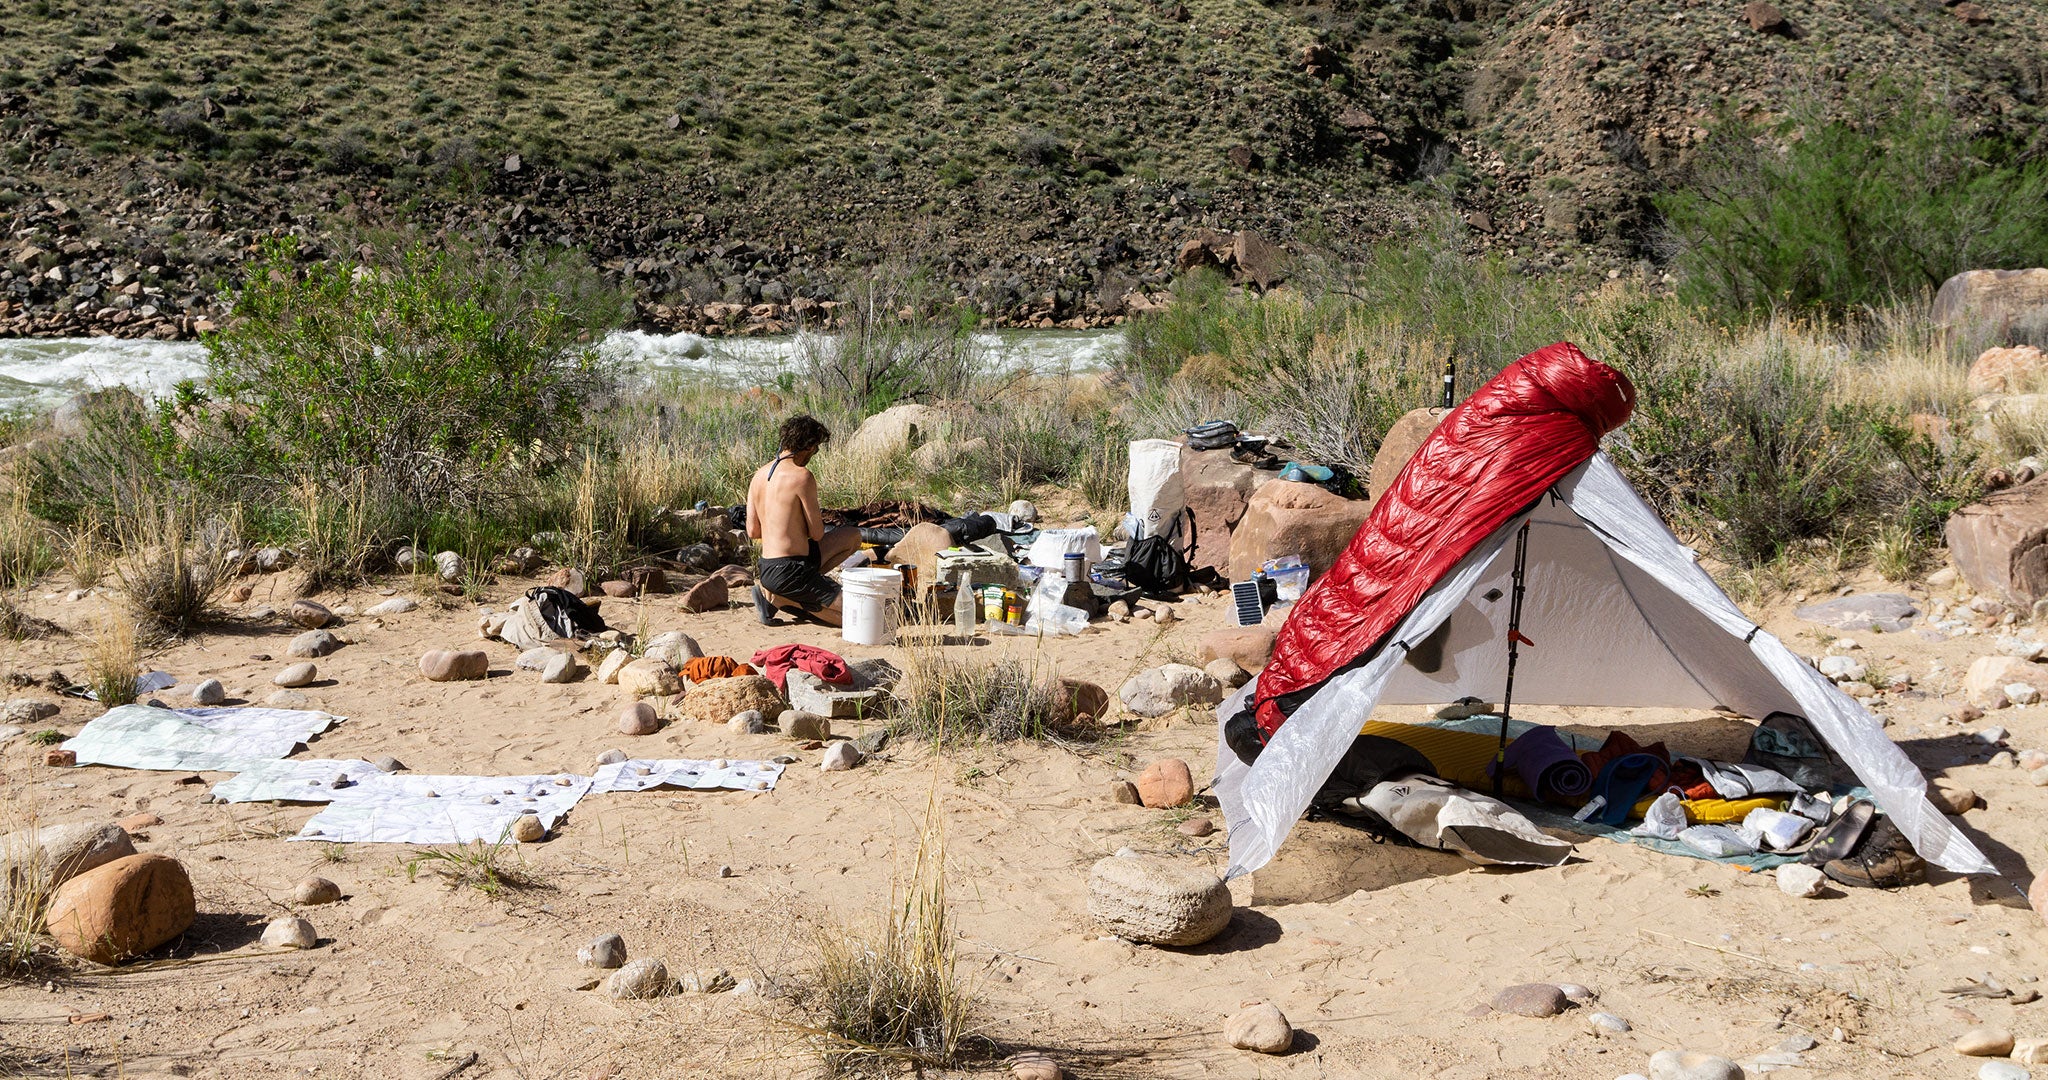 Ultralight Backpacker setting up camp along a river